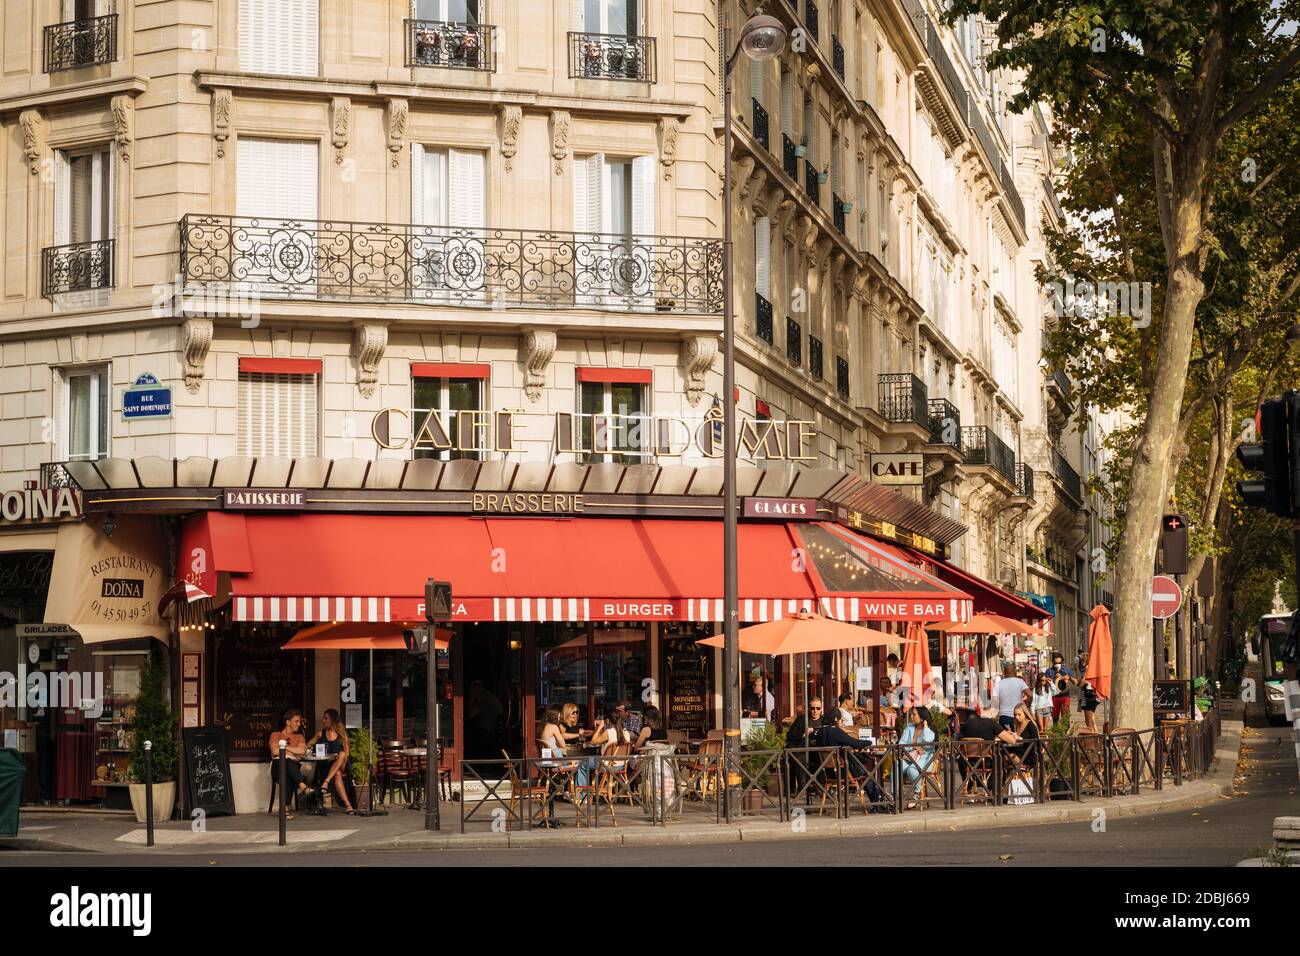 Exterior of Cafe Le Dome Brasserie, Paris, Ile-de-France, France, Europe Stock Photo